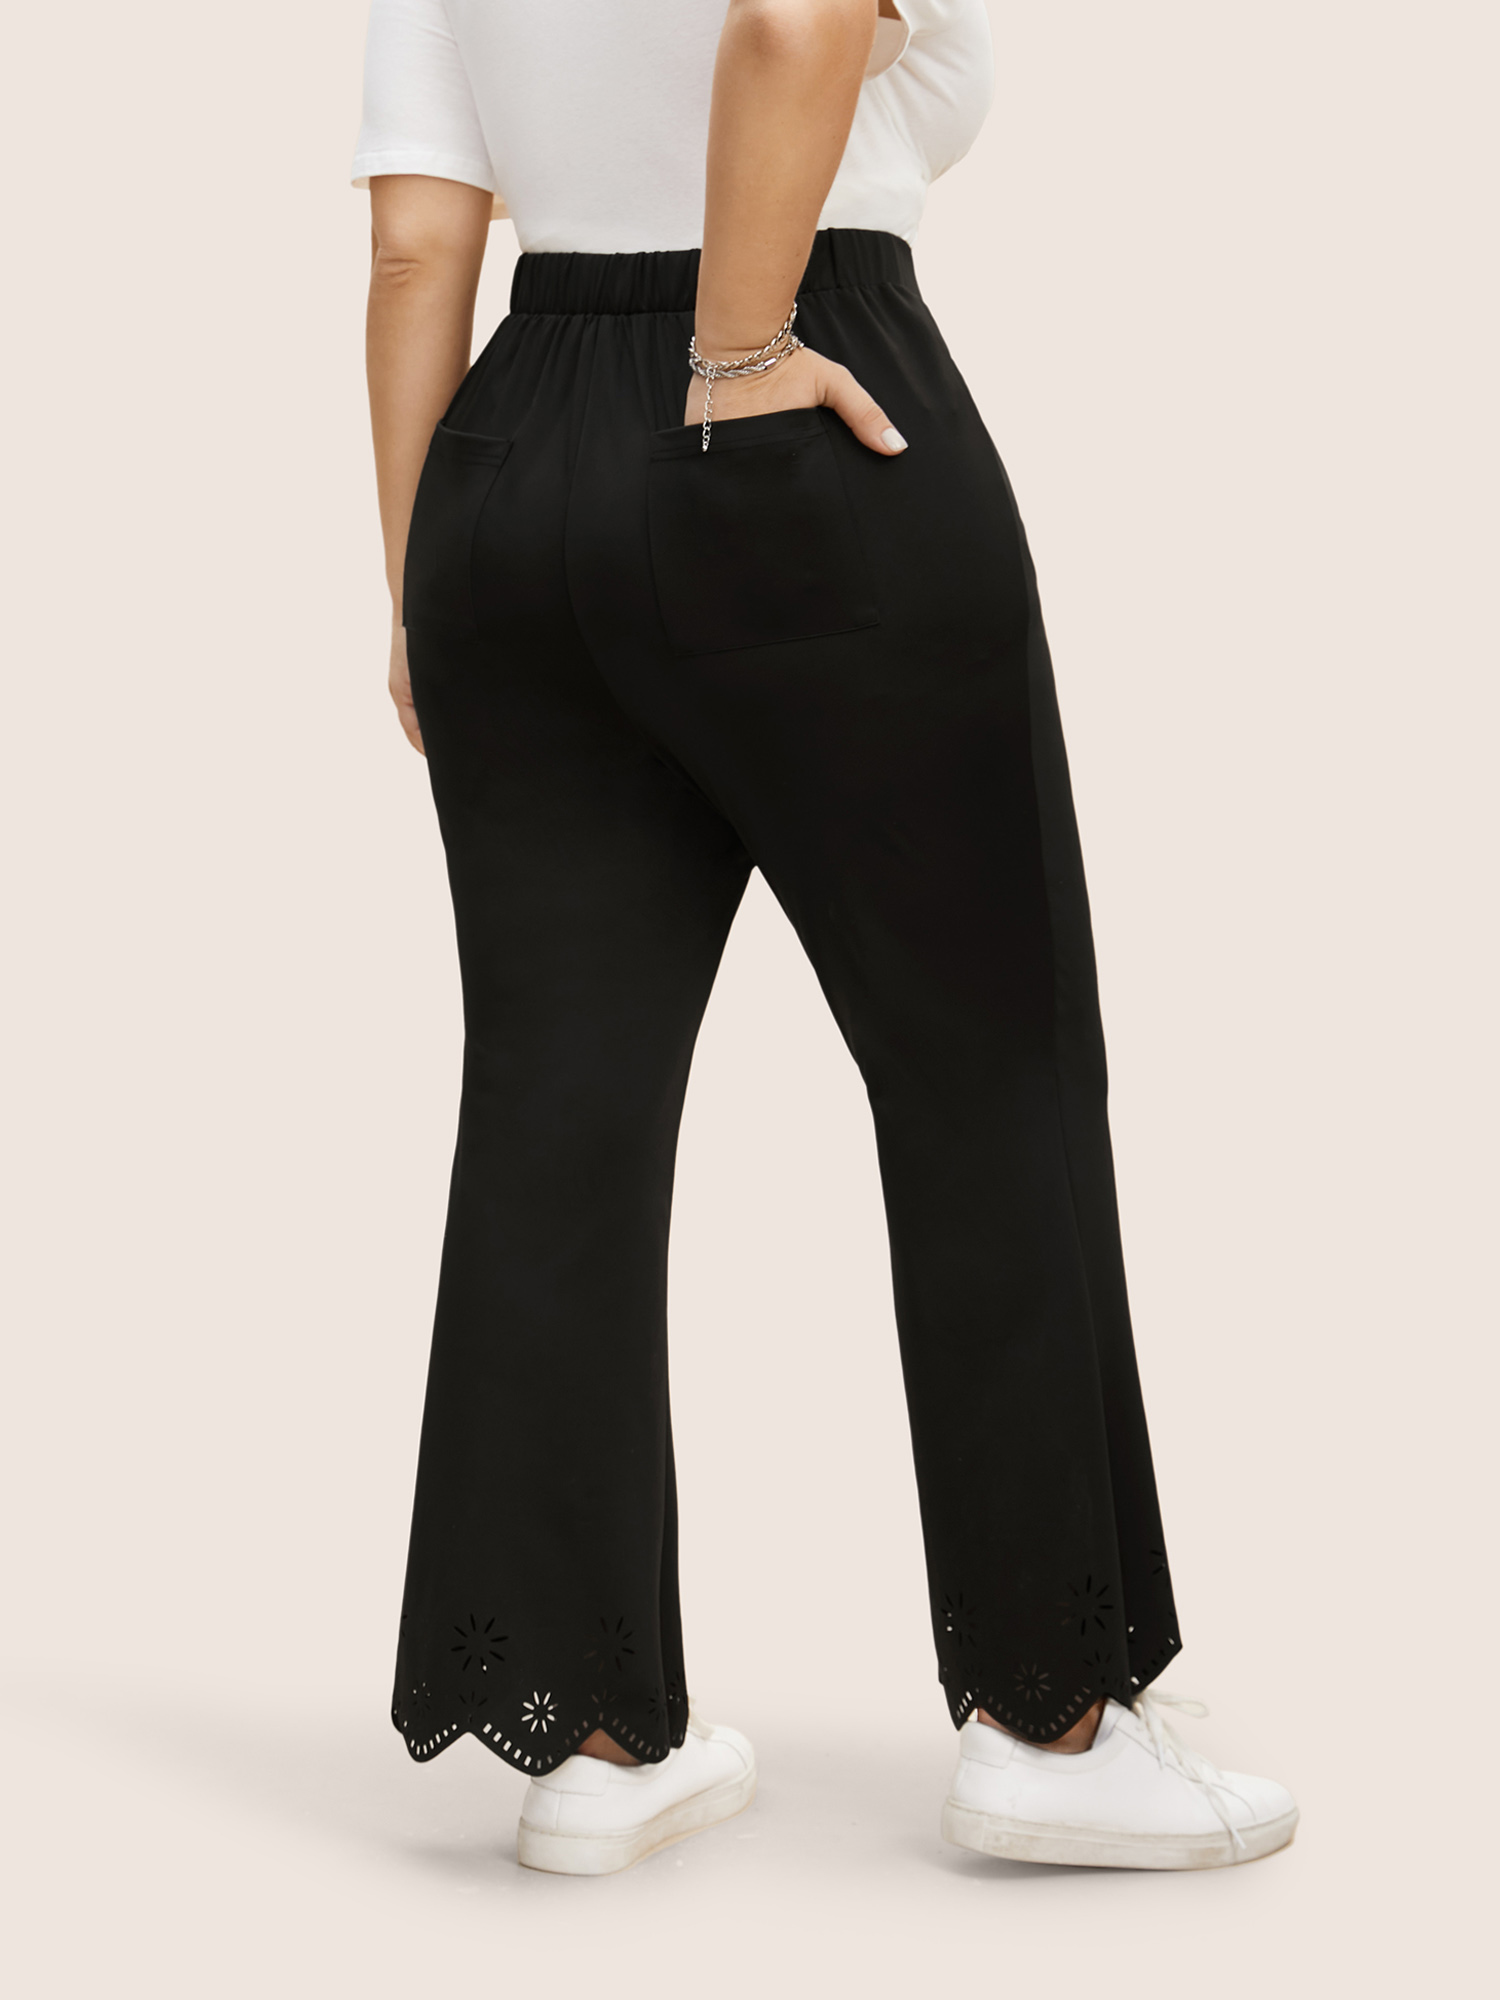 

Plus Size Medium Stretch Laser Cut Elastic Waist Bootcut Pants Women Black Elegant Bootcut Mid Rise Everyday Pants BloomChic